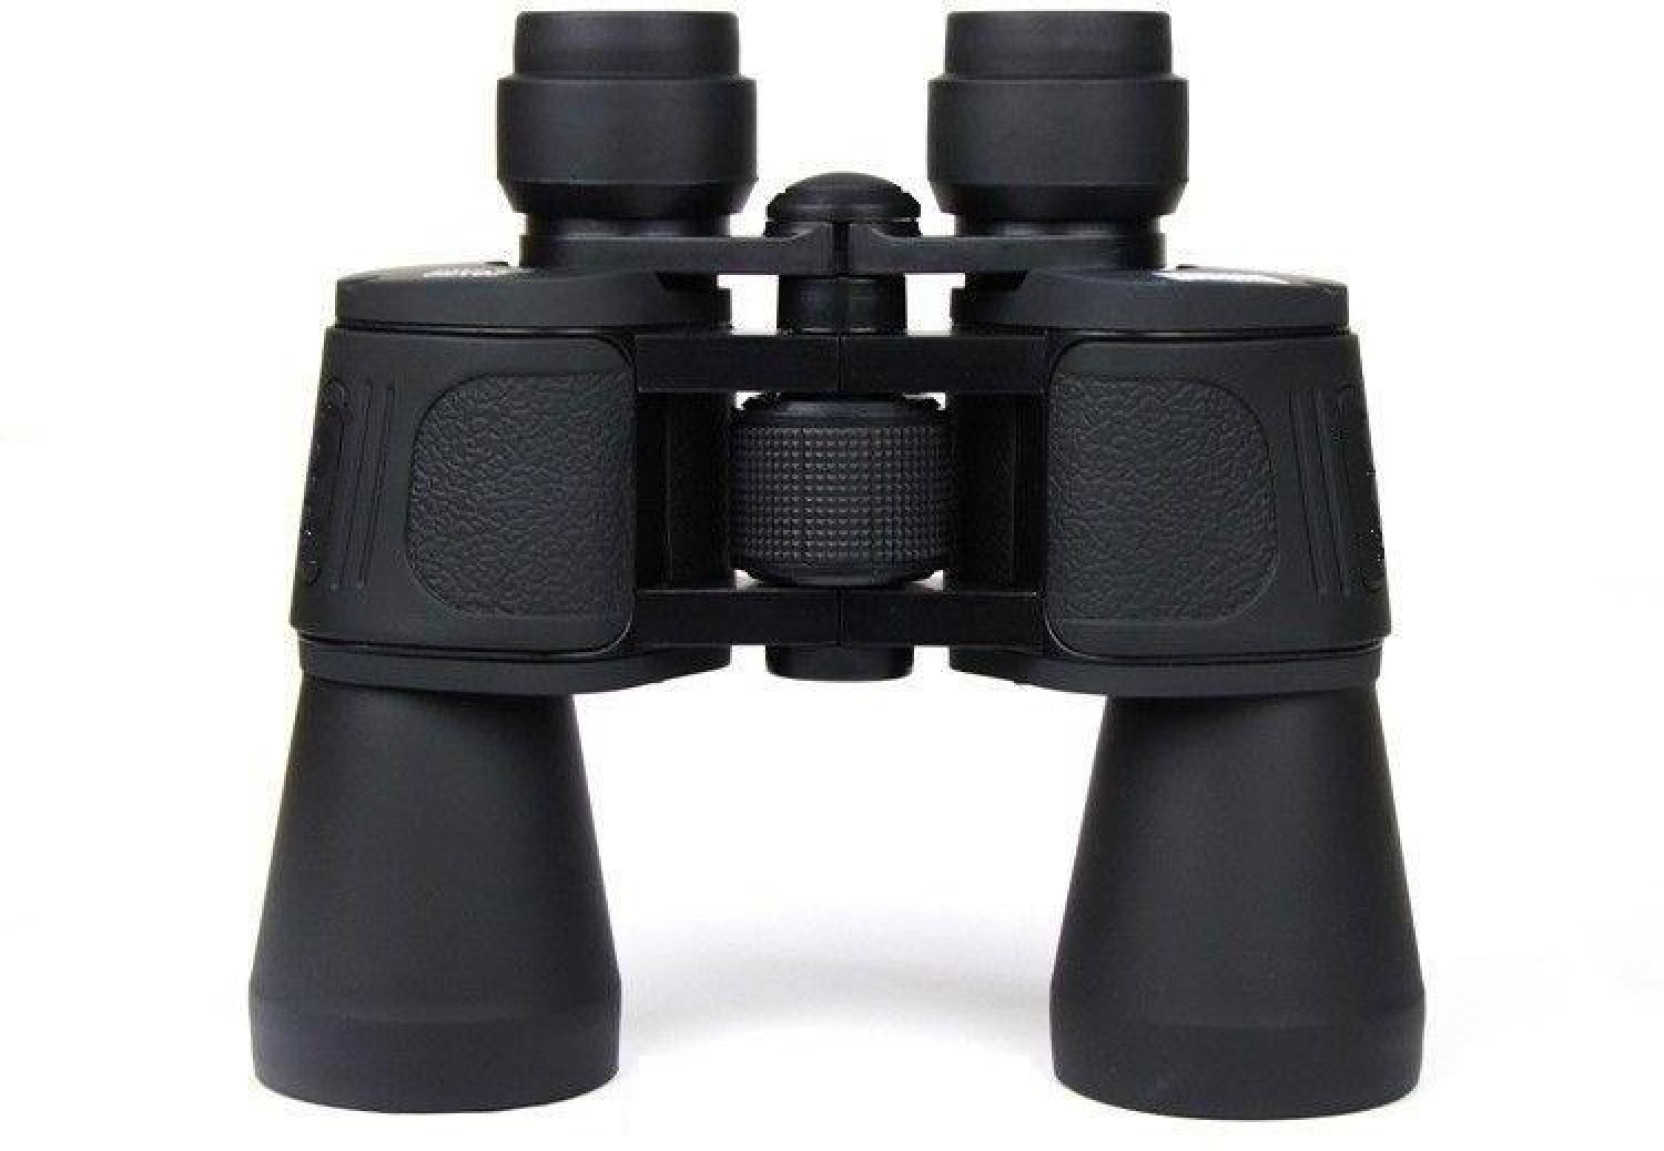 3X Magnification Binoculars Handheld Opera Glasses Hand